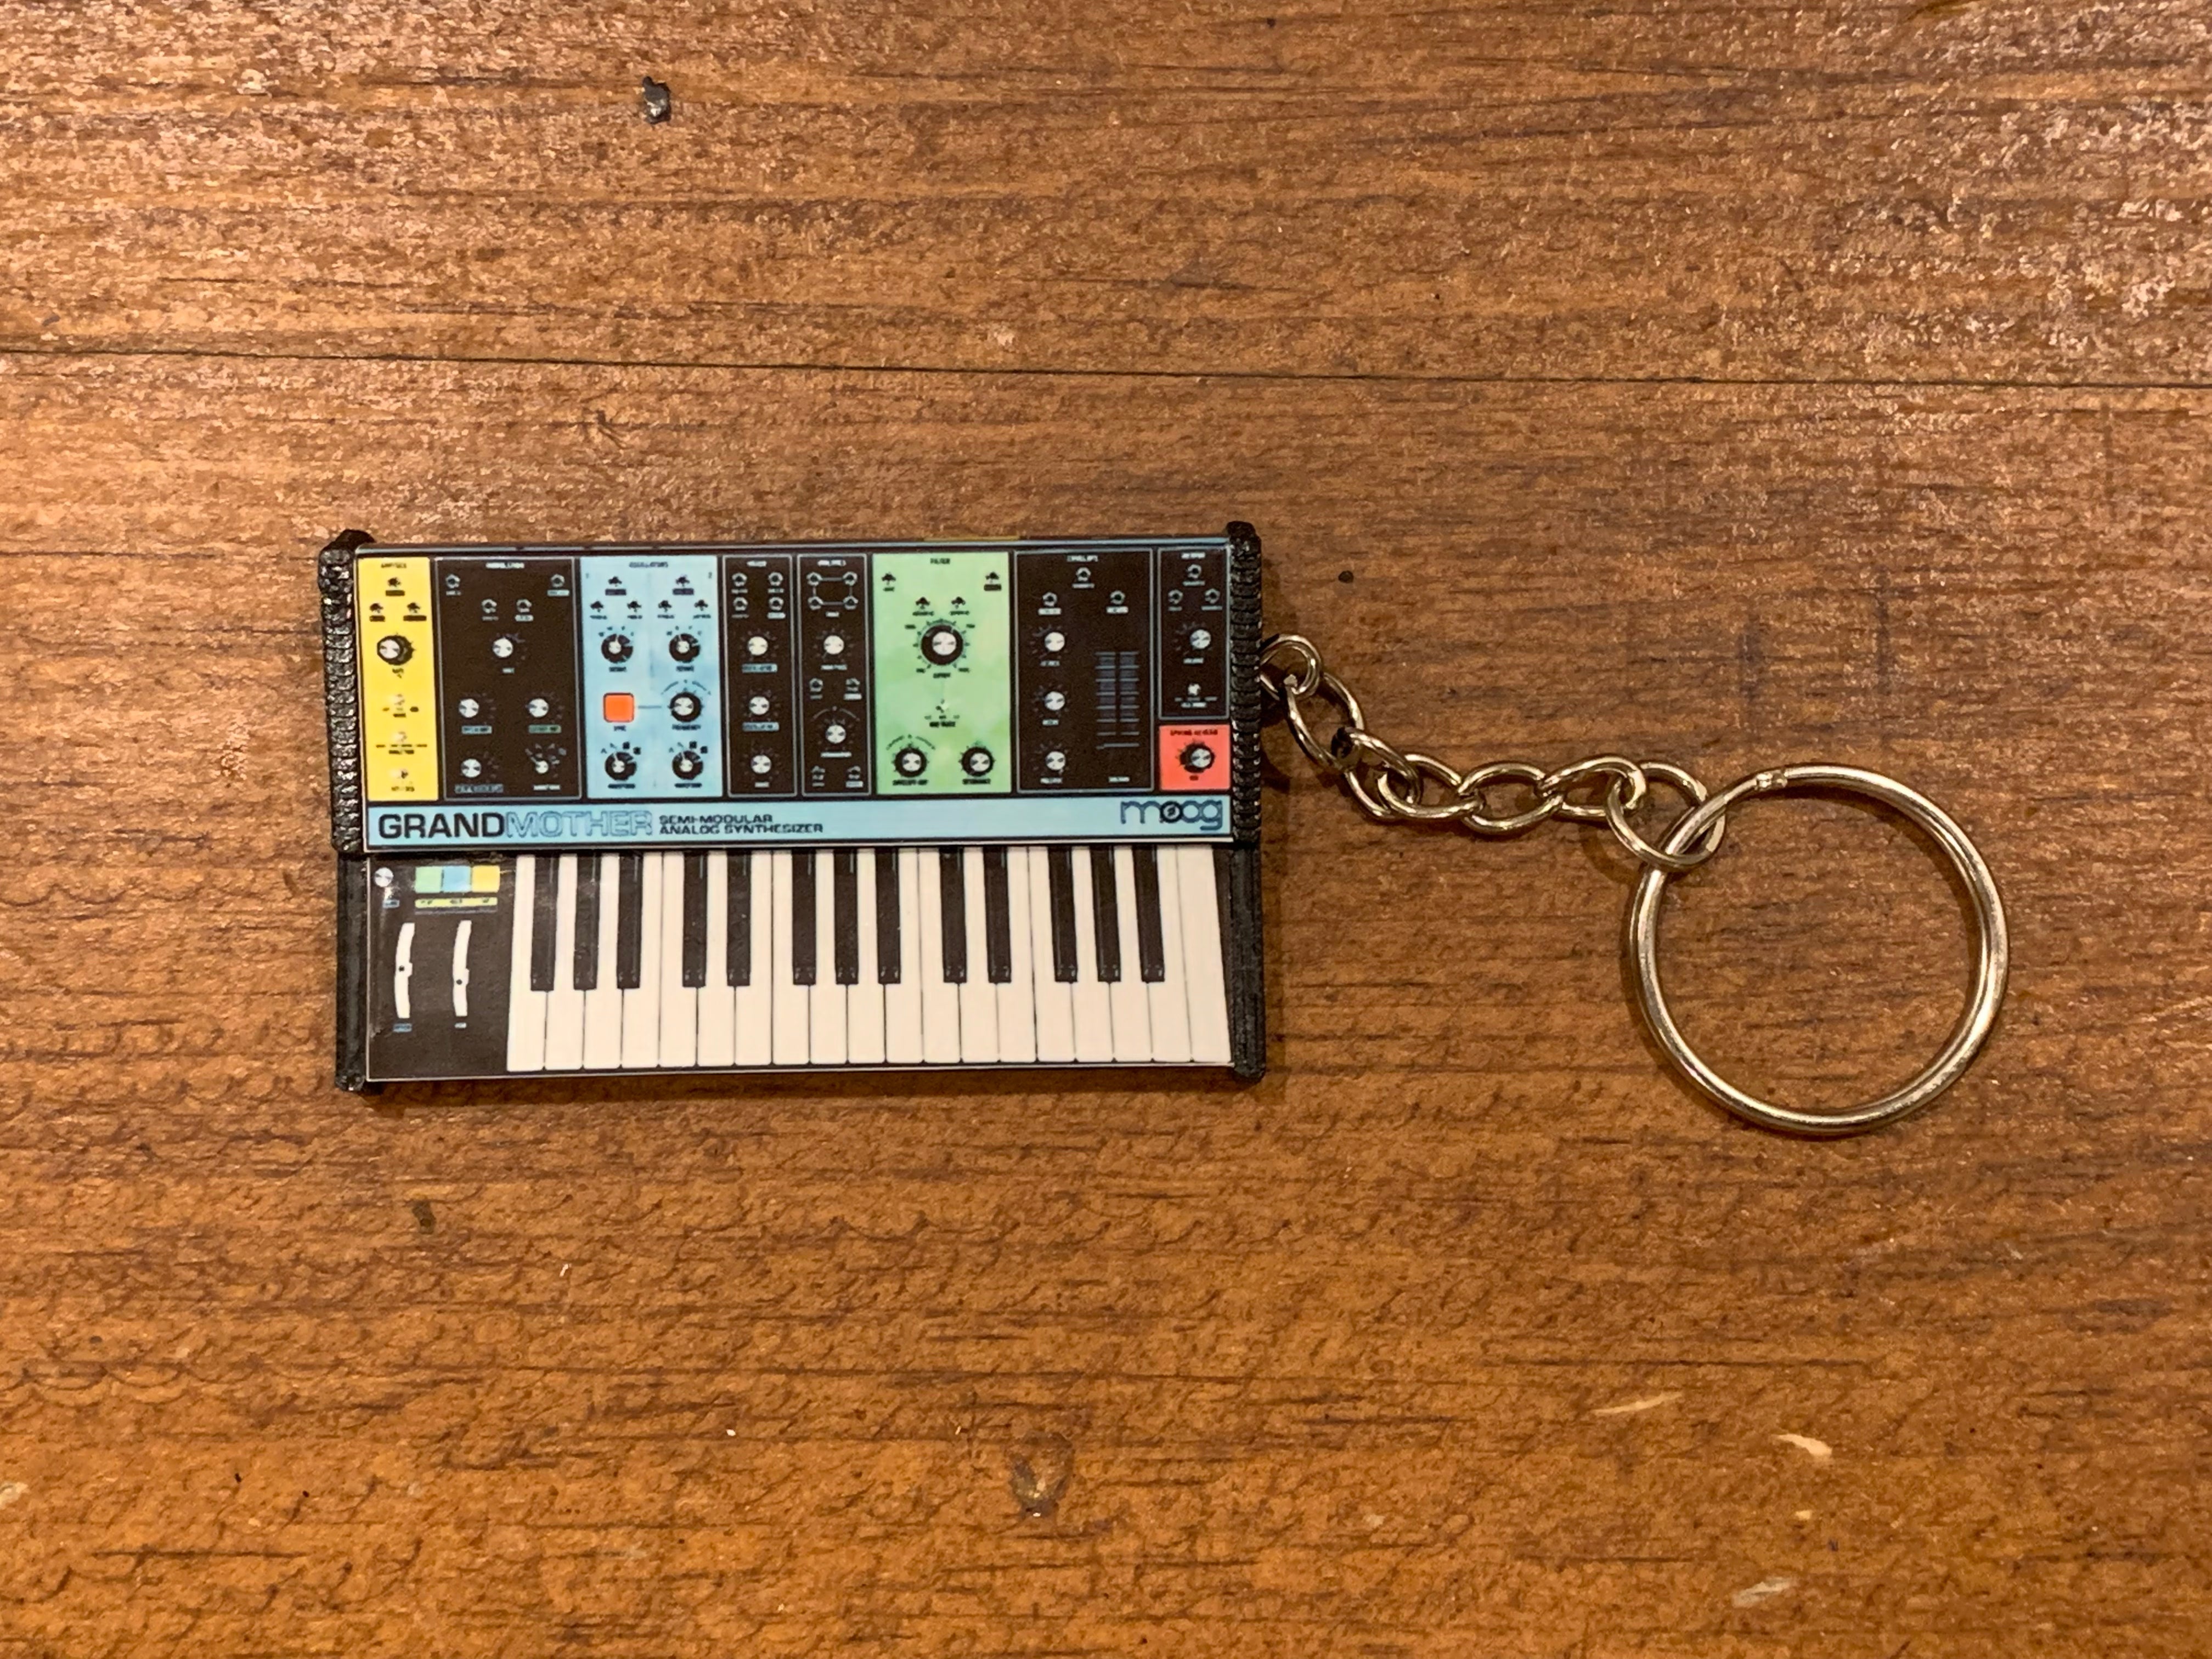 Moog Grandmother handmade keychain – The Low Pass